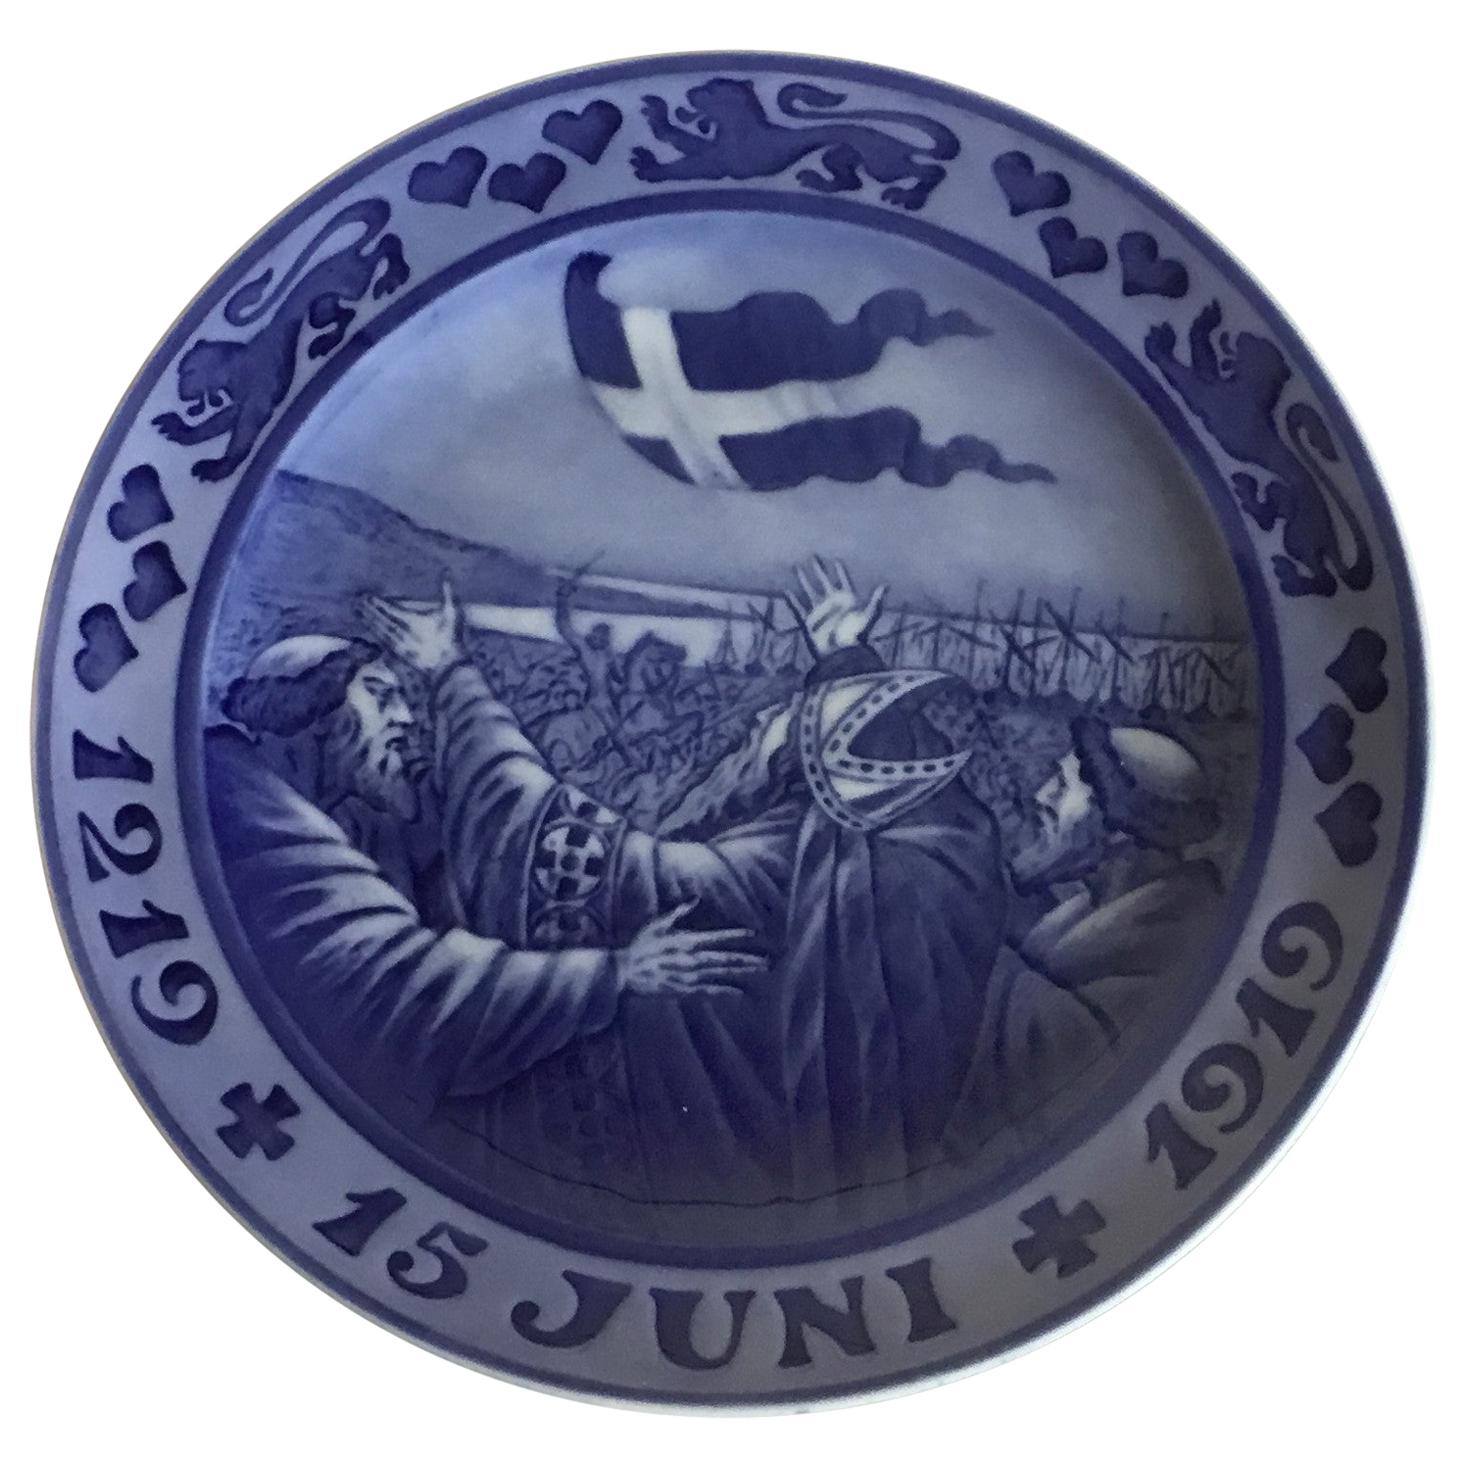 Royal Copenhagen Commemorative Plate from 1918 RC-CM183